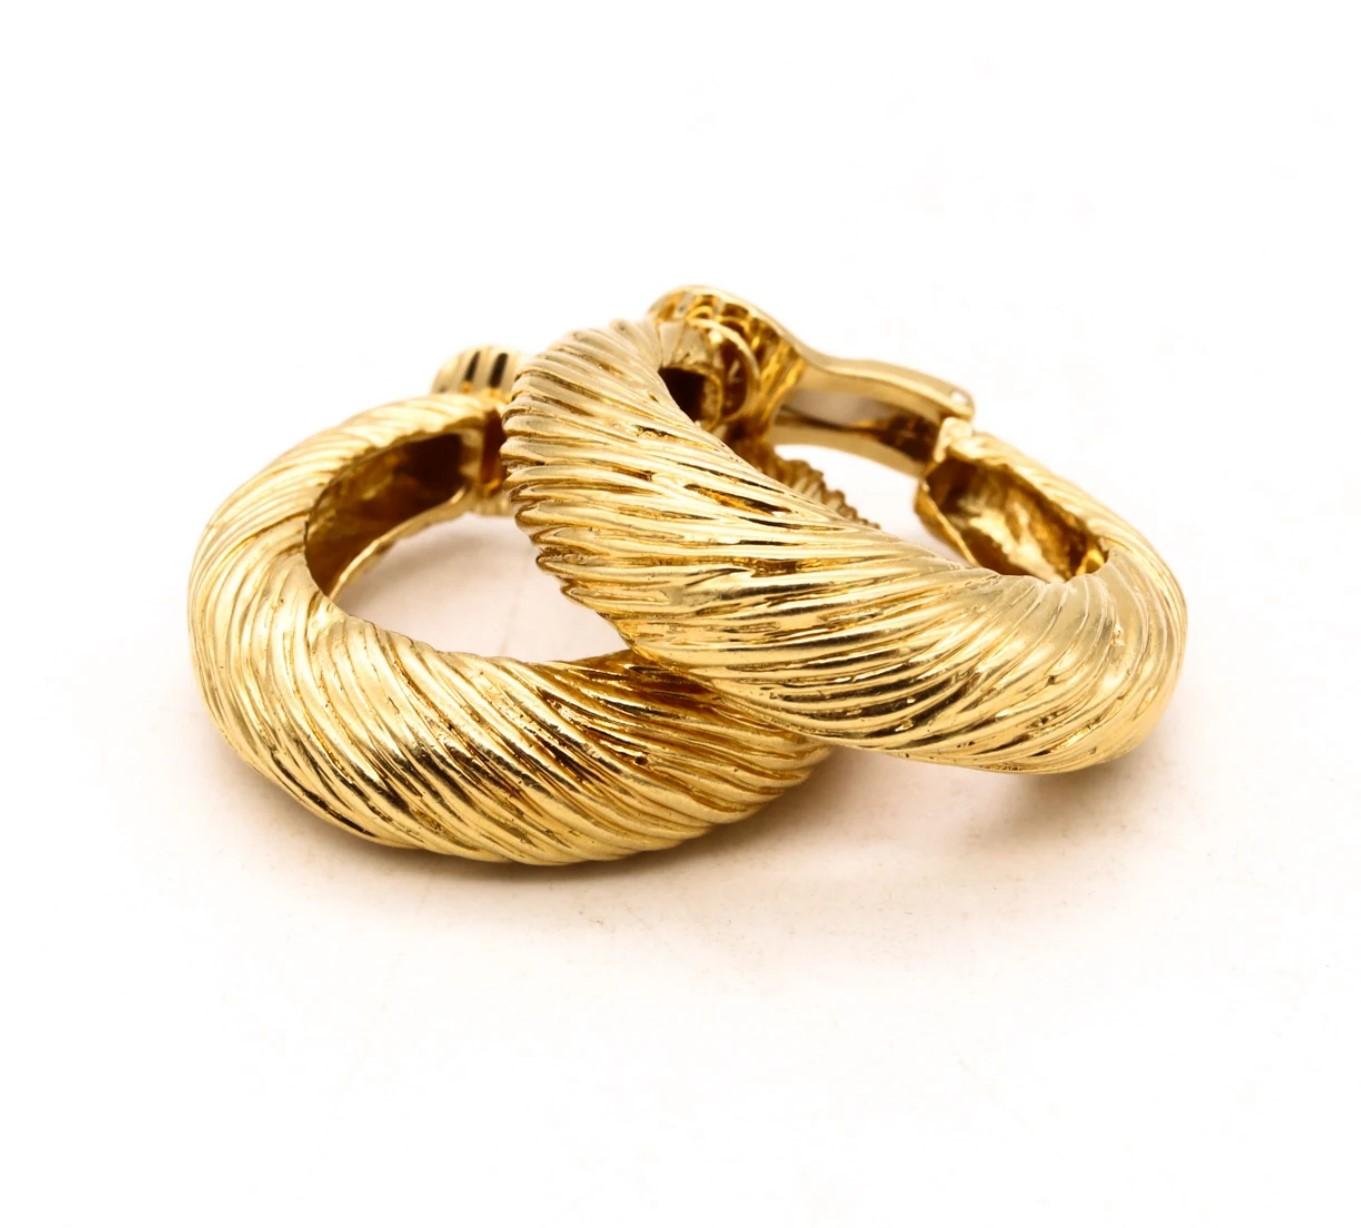 Modernist Kutchinsky 1972 British London Textured Large Hoop Earrings In Solid 18Kt Gold For Sale